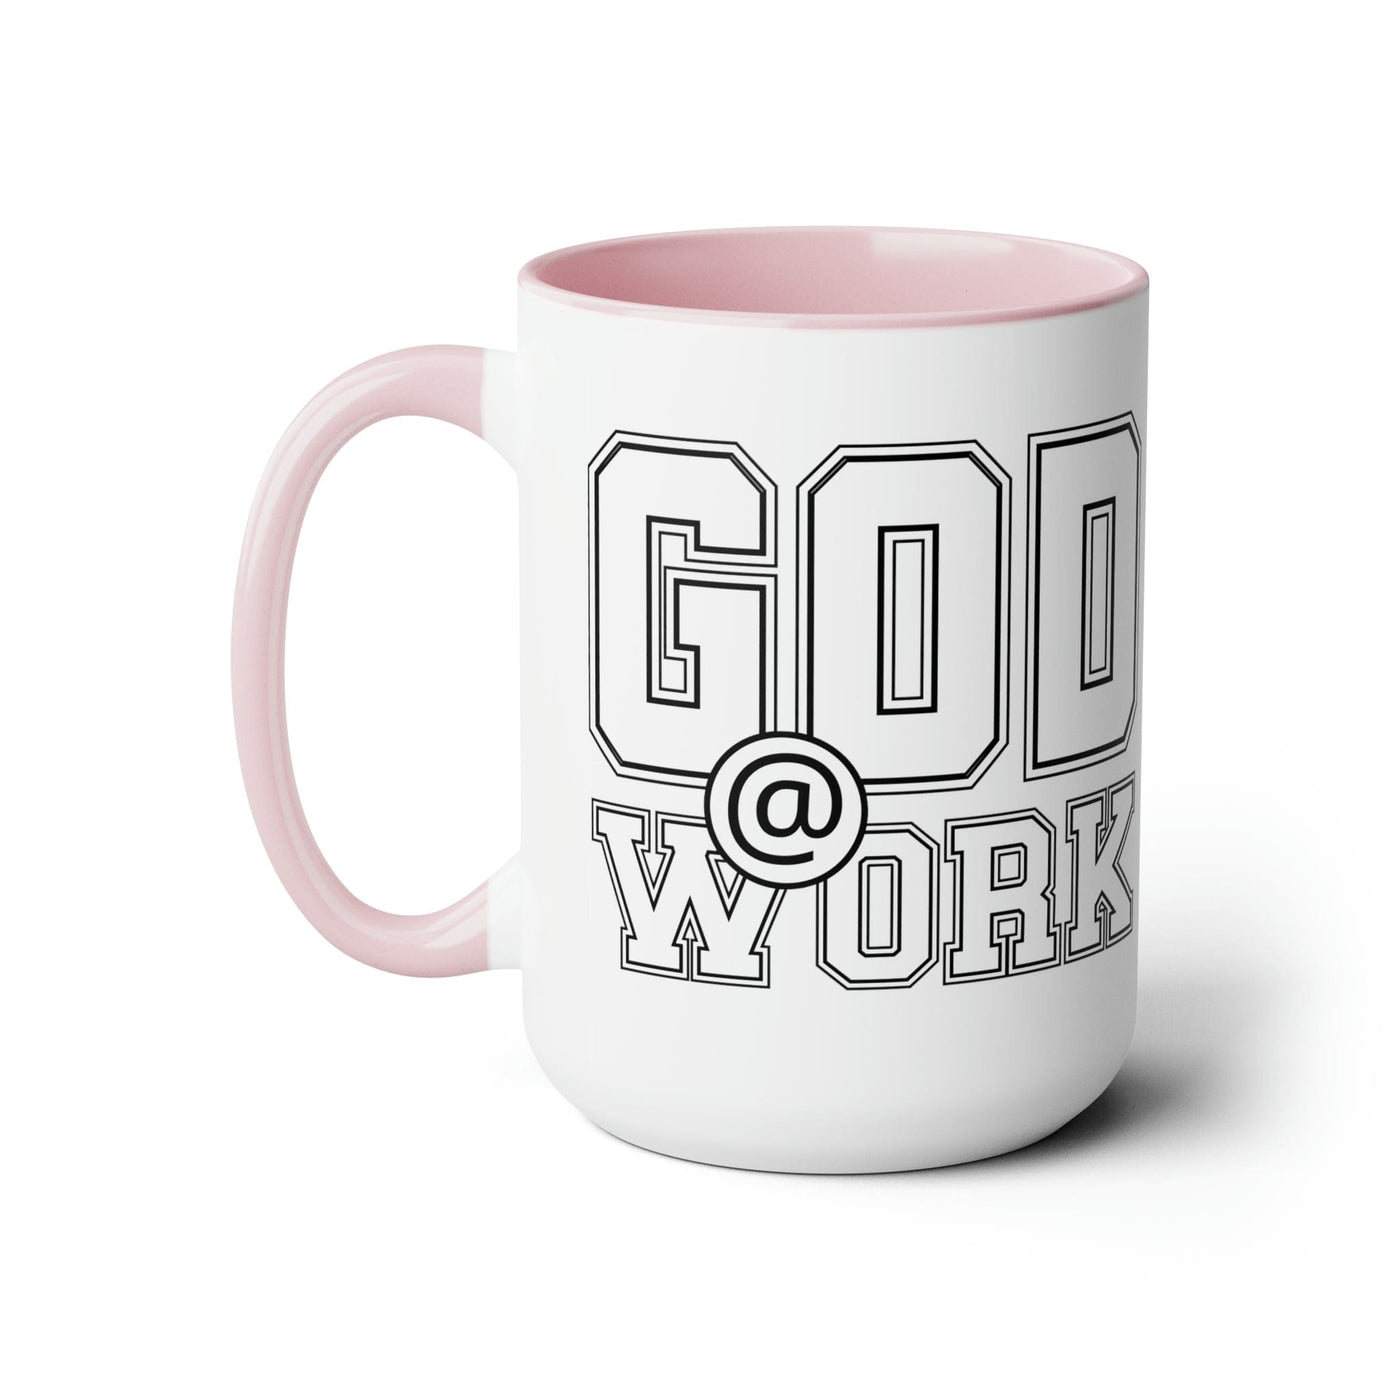 Accent Ceramic Coffee Mug 15oz - God @ Work White And Black Print - Decorative